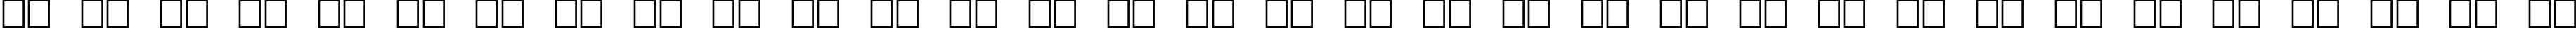 Пример написания русского алфавита шрифтом Draughtsman Bold